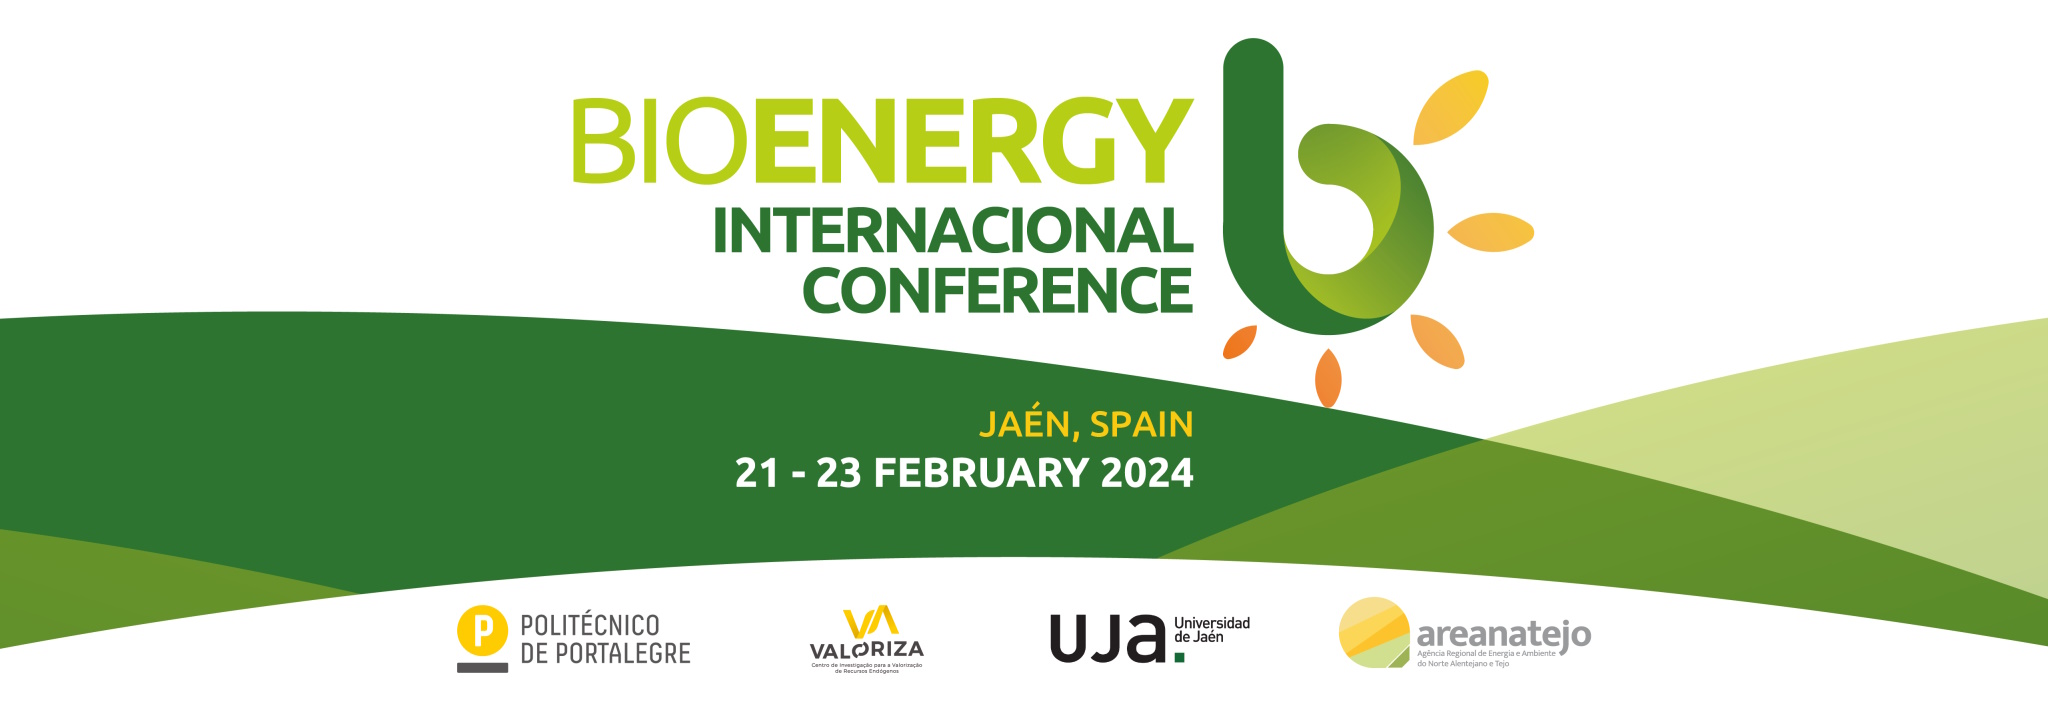 Bioenergy international conference 2023